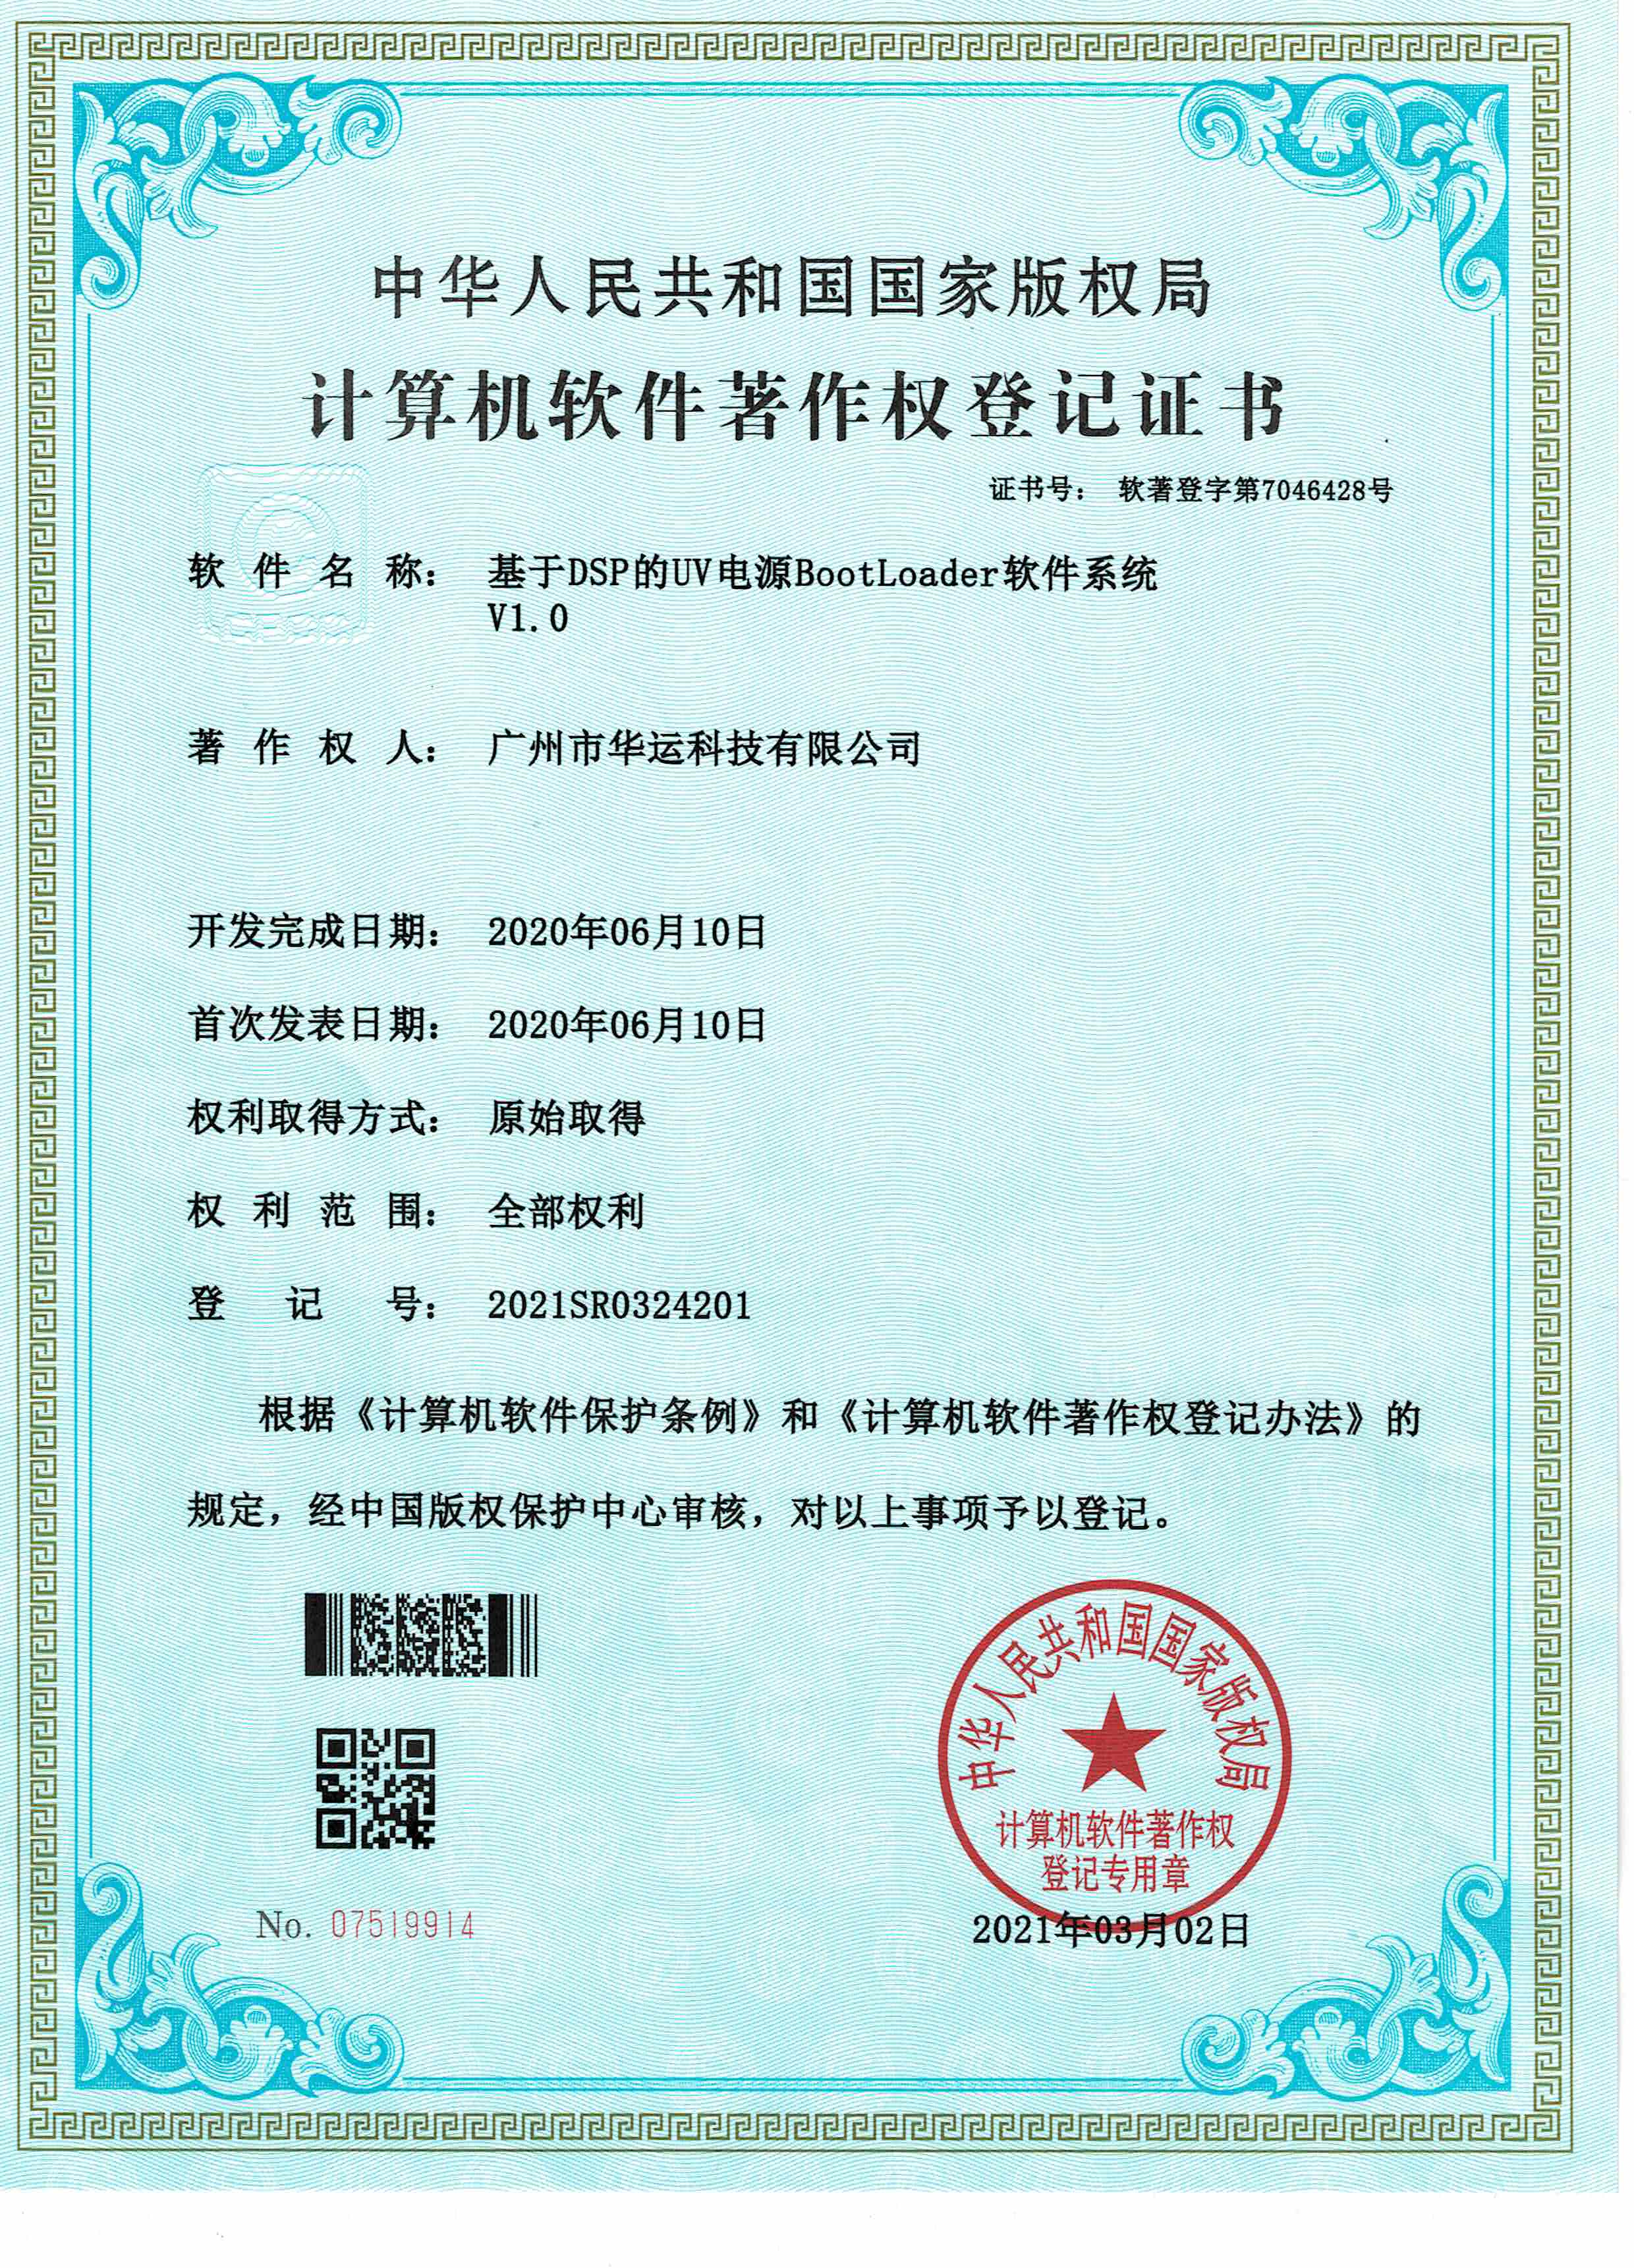 Copyright Of Computer Software Certificate-The DSP-Based UV Power Bootloader Software System V1.0